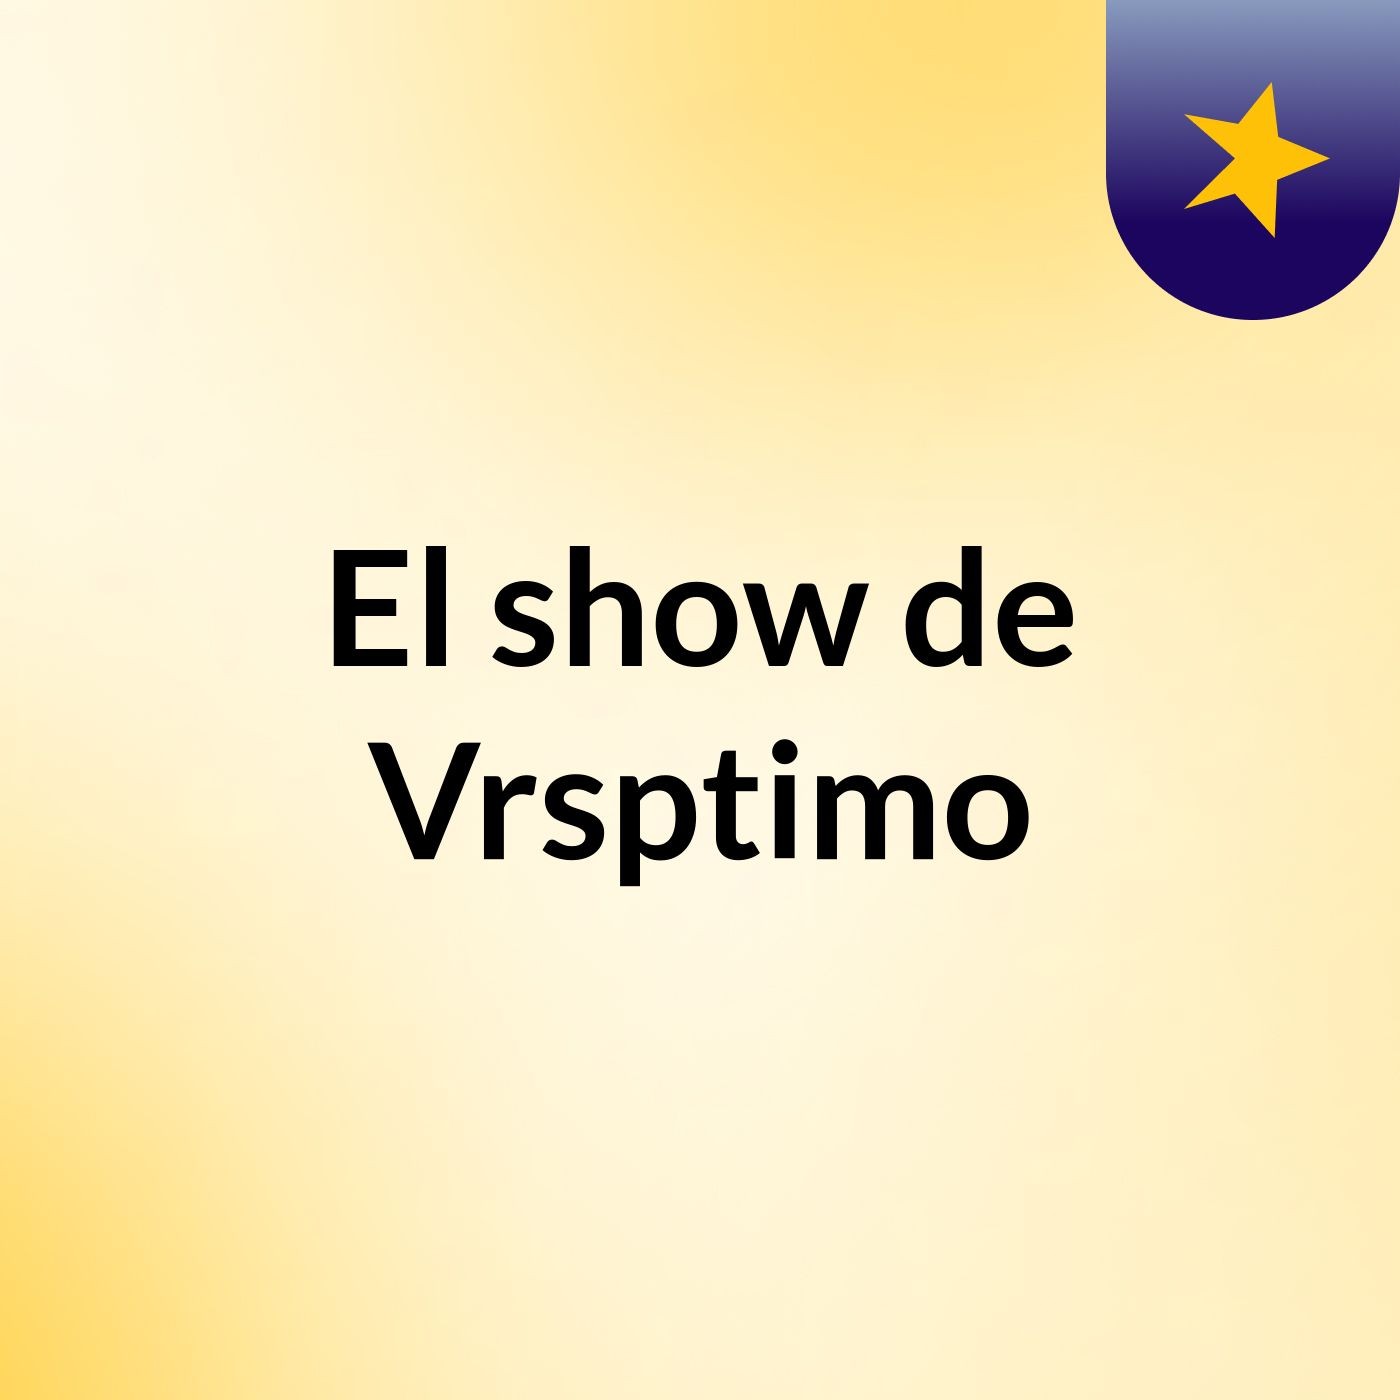 Episodio 7 - El show de Vrsptimo